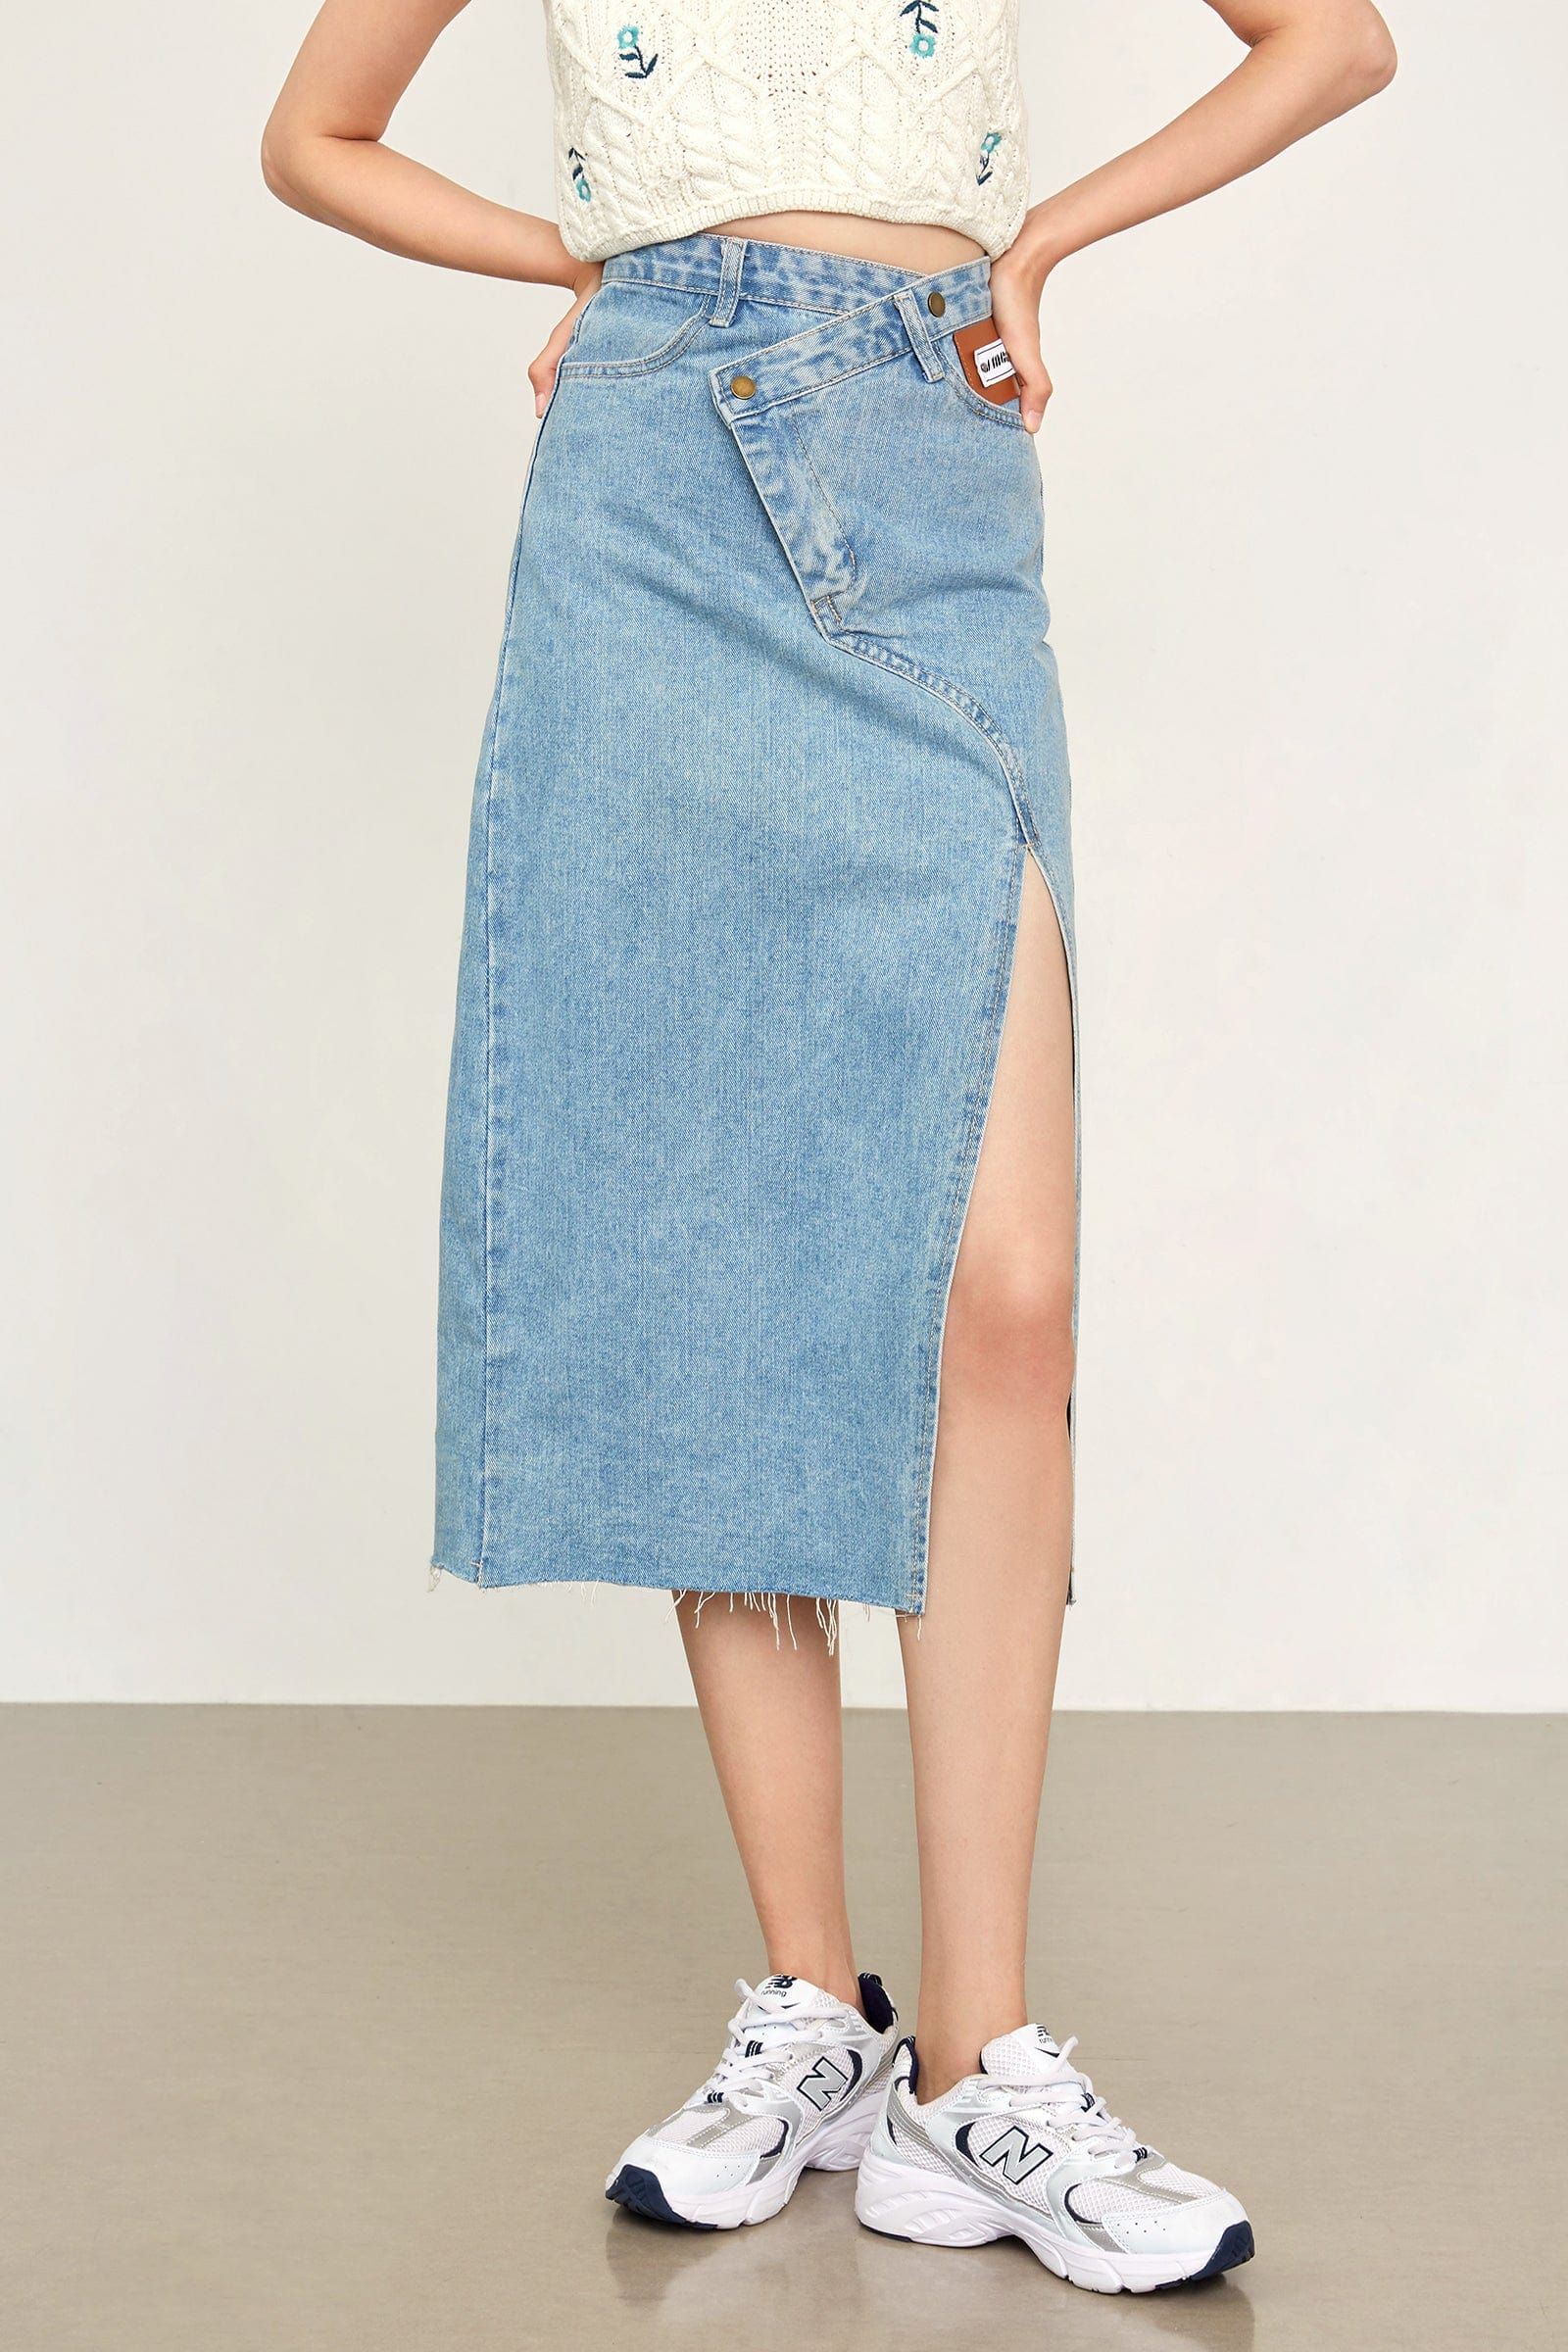 Samaria Light Sky Blue Asymmetrical Skirt | J.ING